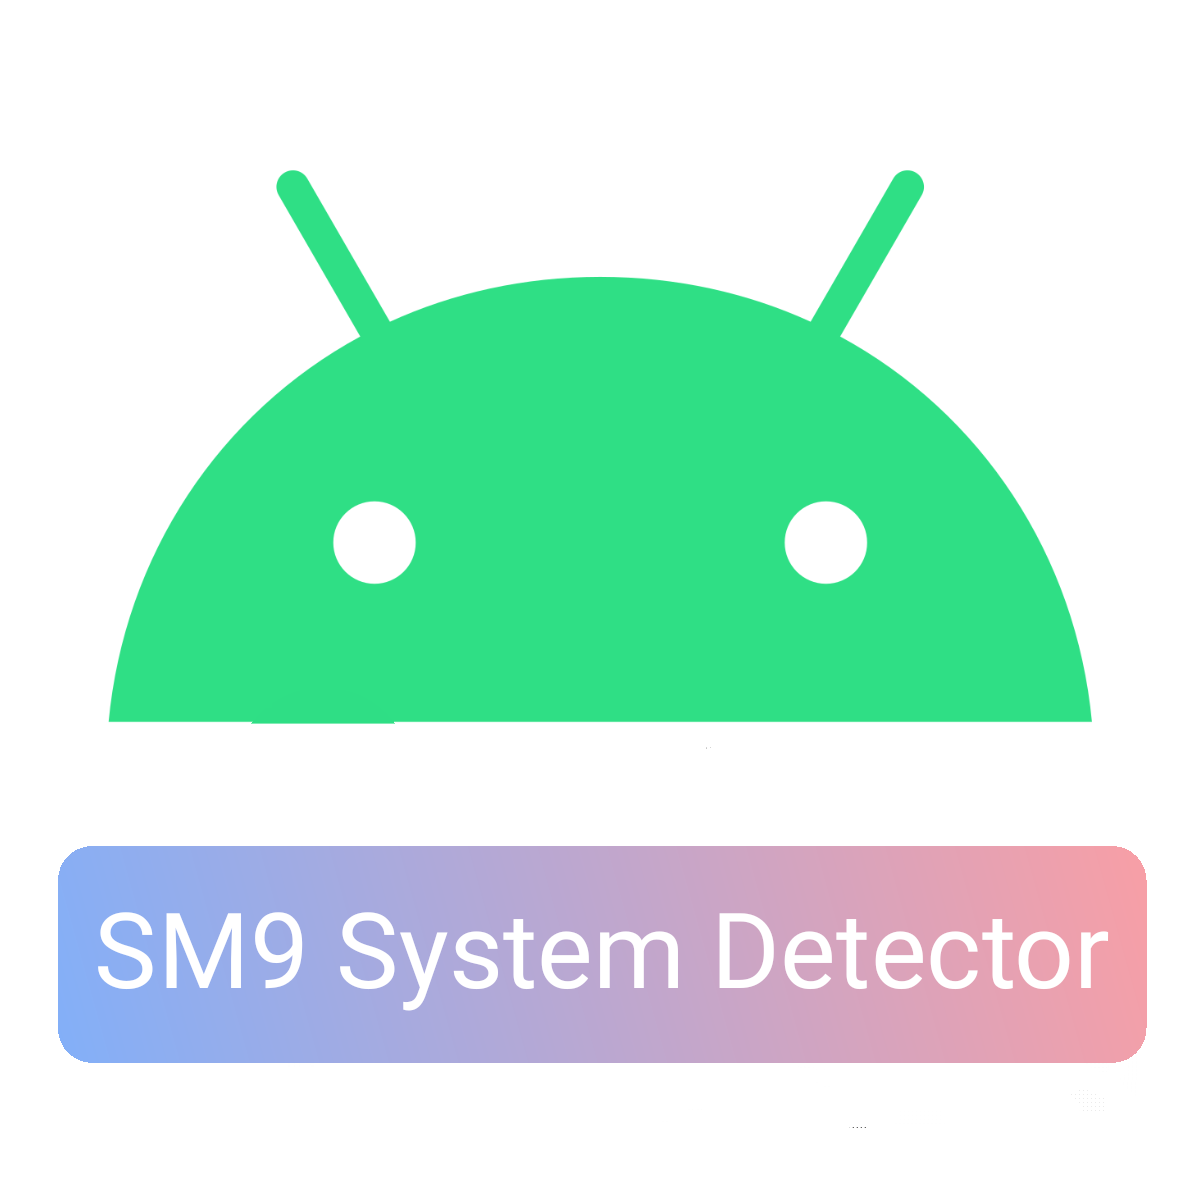 SM9 System Detector